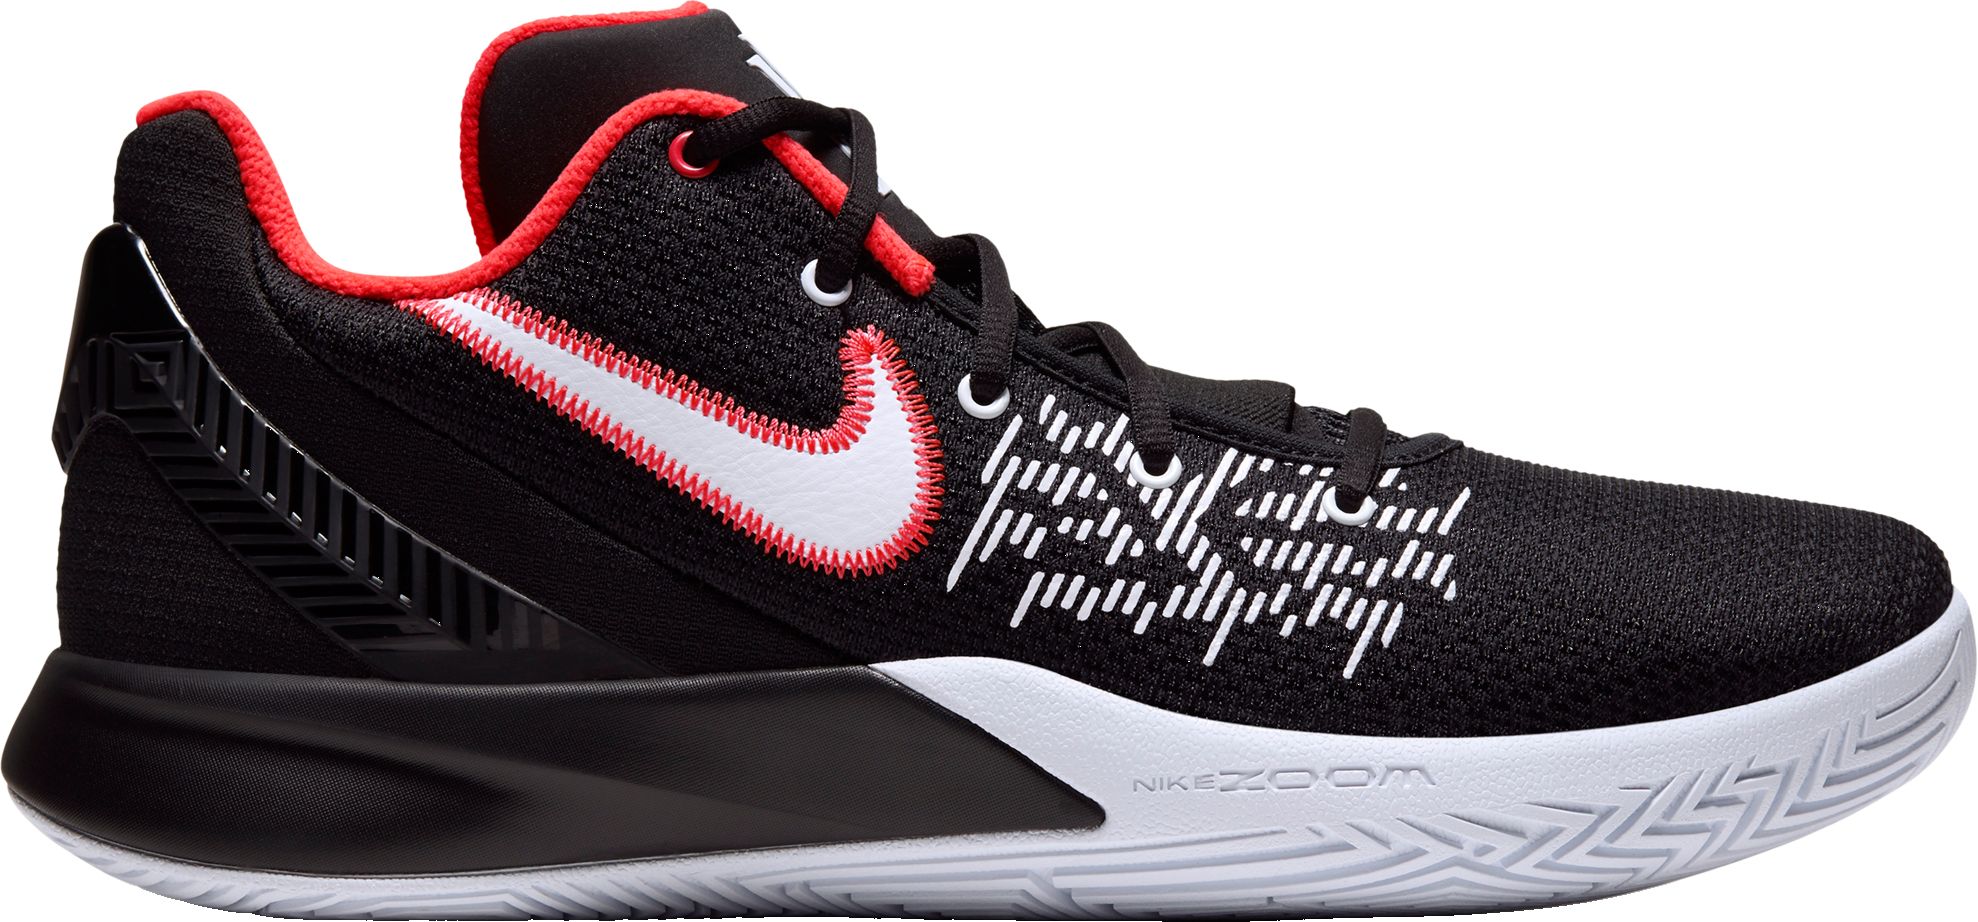 Nike Kyrie Flytrap II Basketball Shoes 